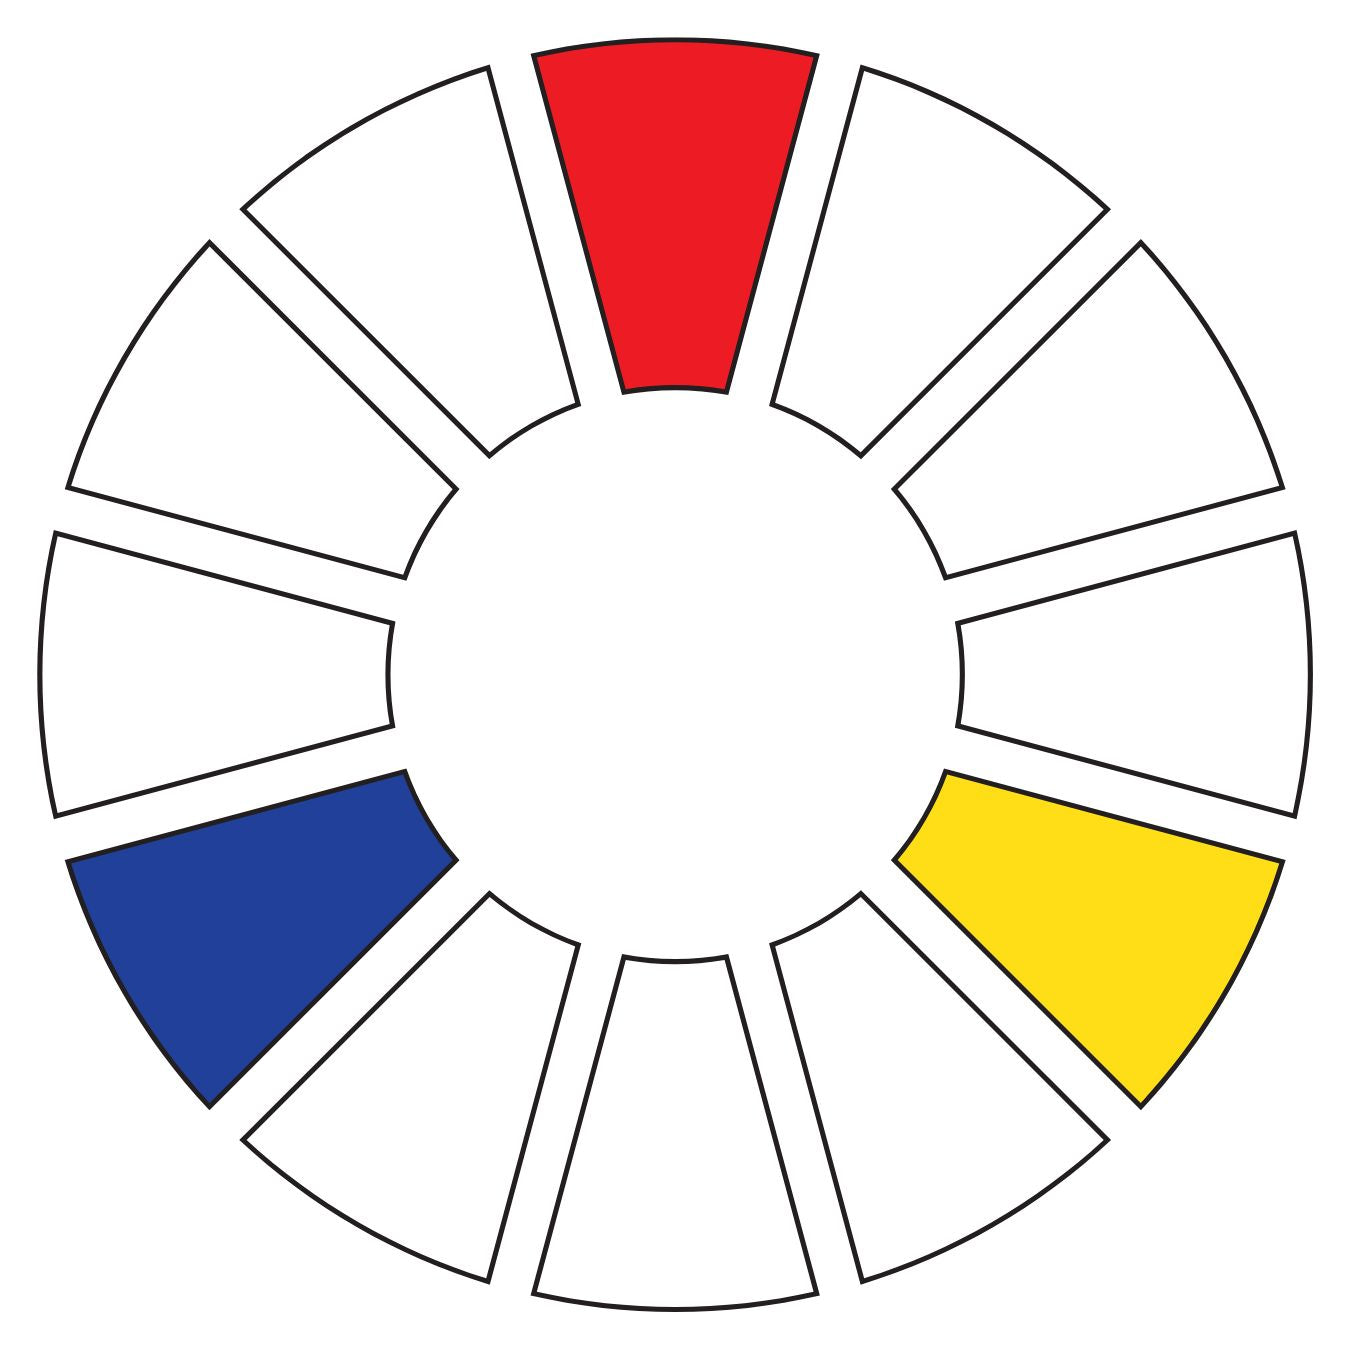 image of a colour wheel